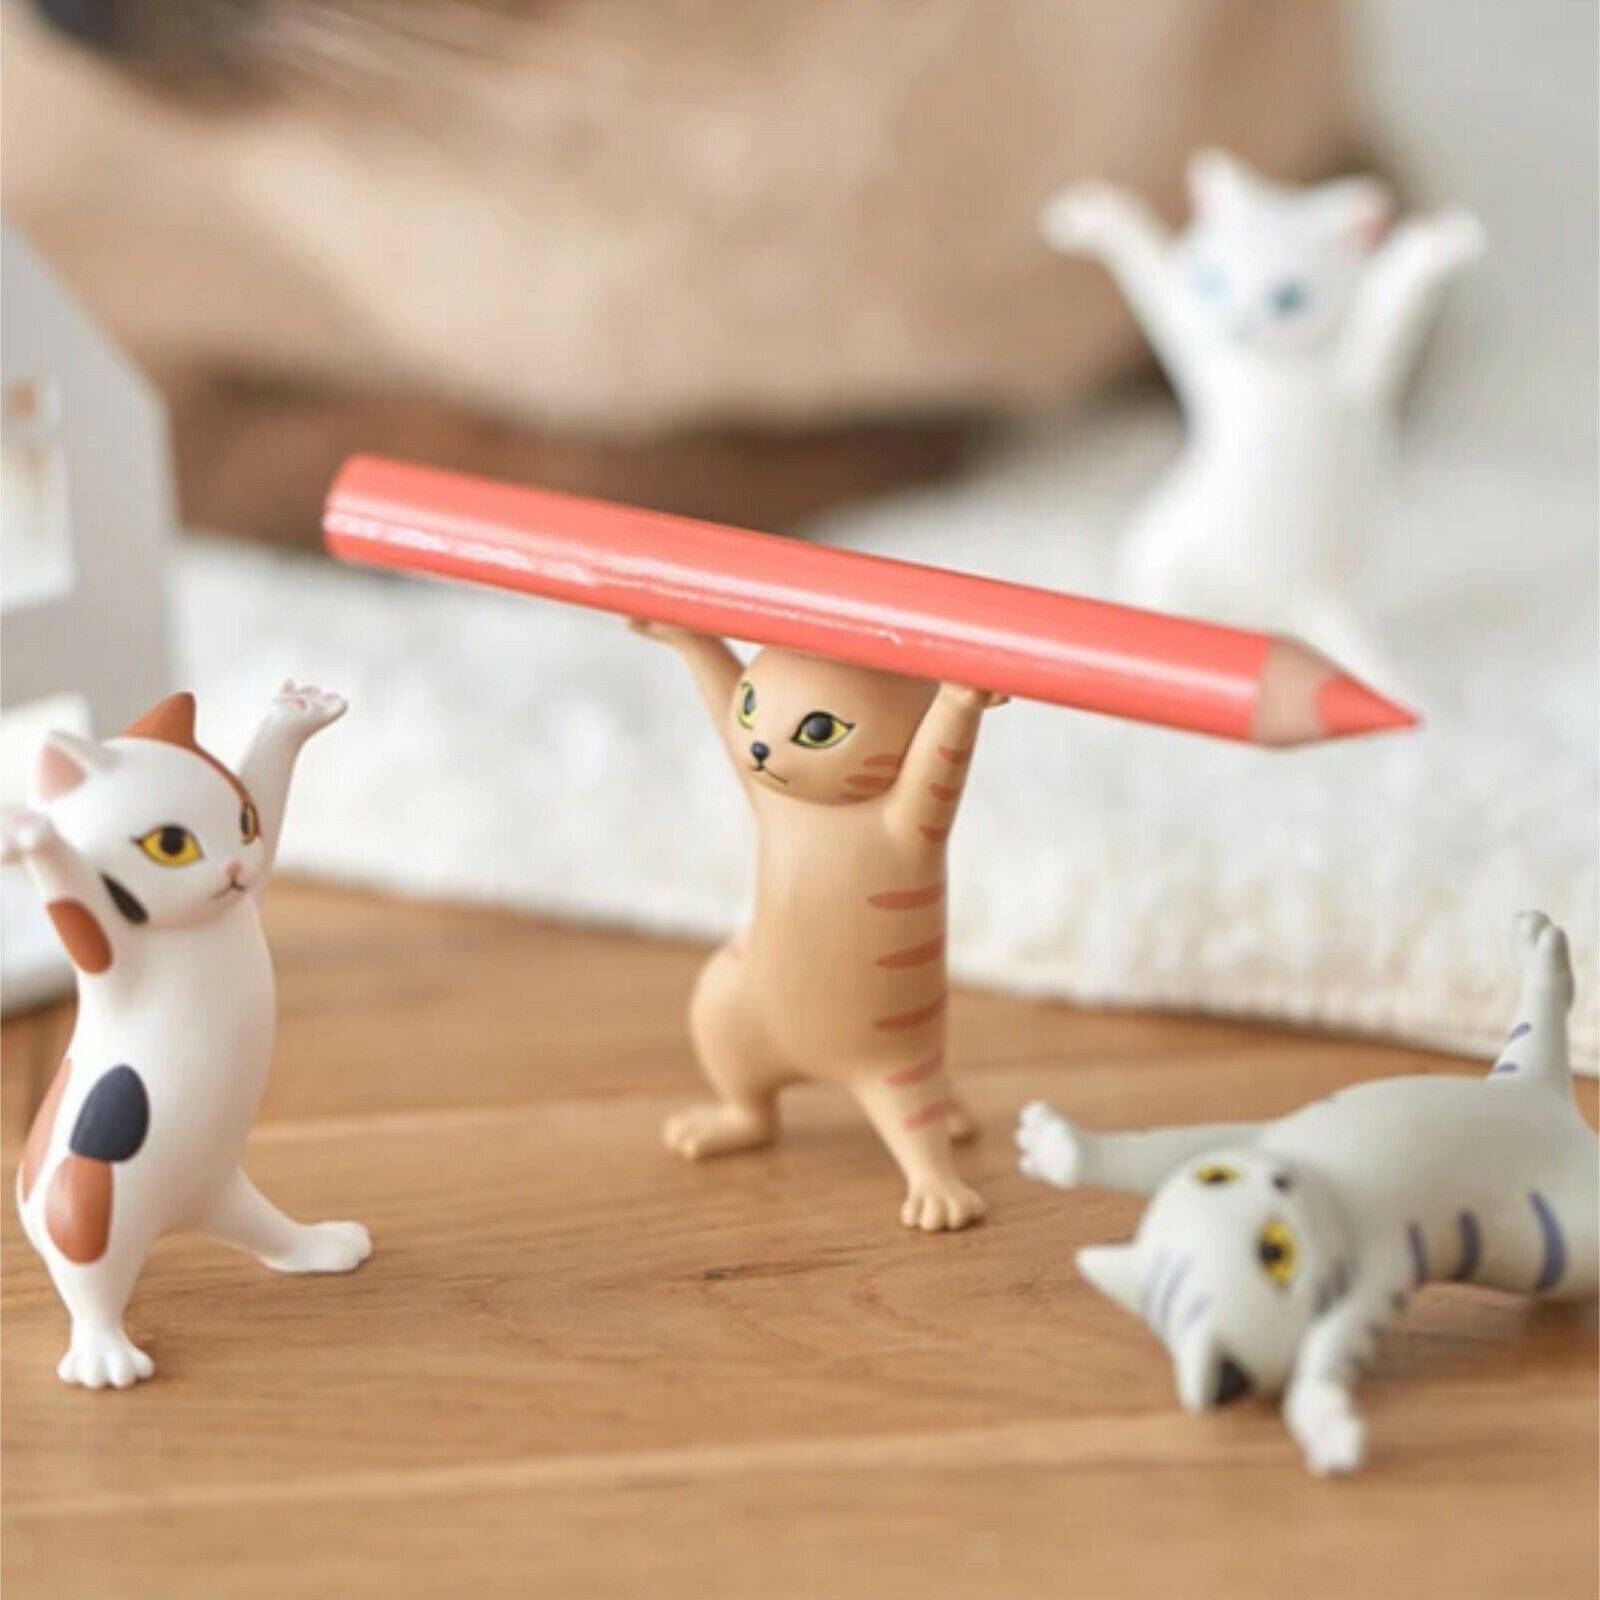 5pcs Dancing Cat Ornament Pen Holder Desktop Bracket Home Decor DIY Crafts